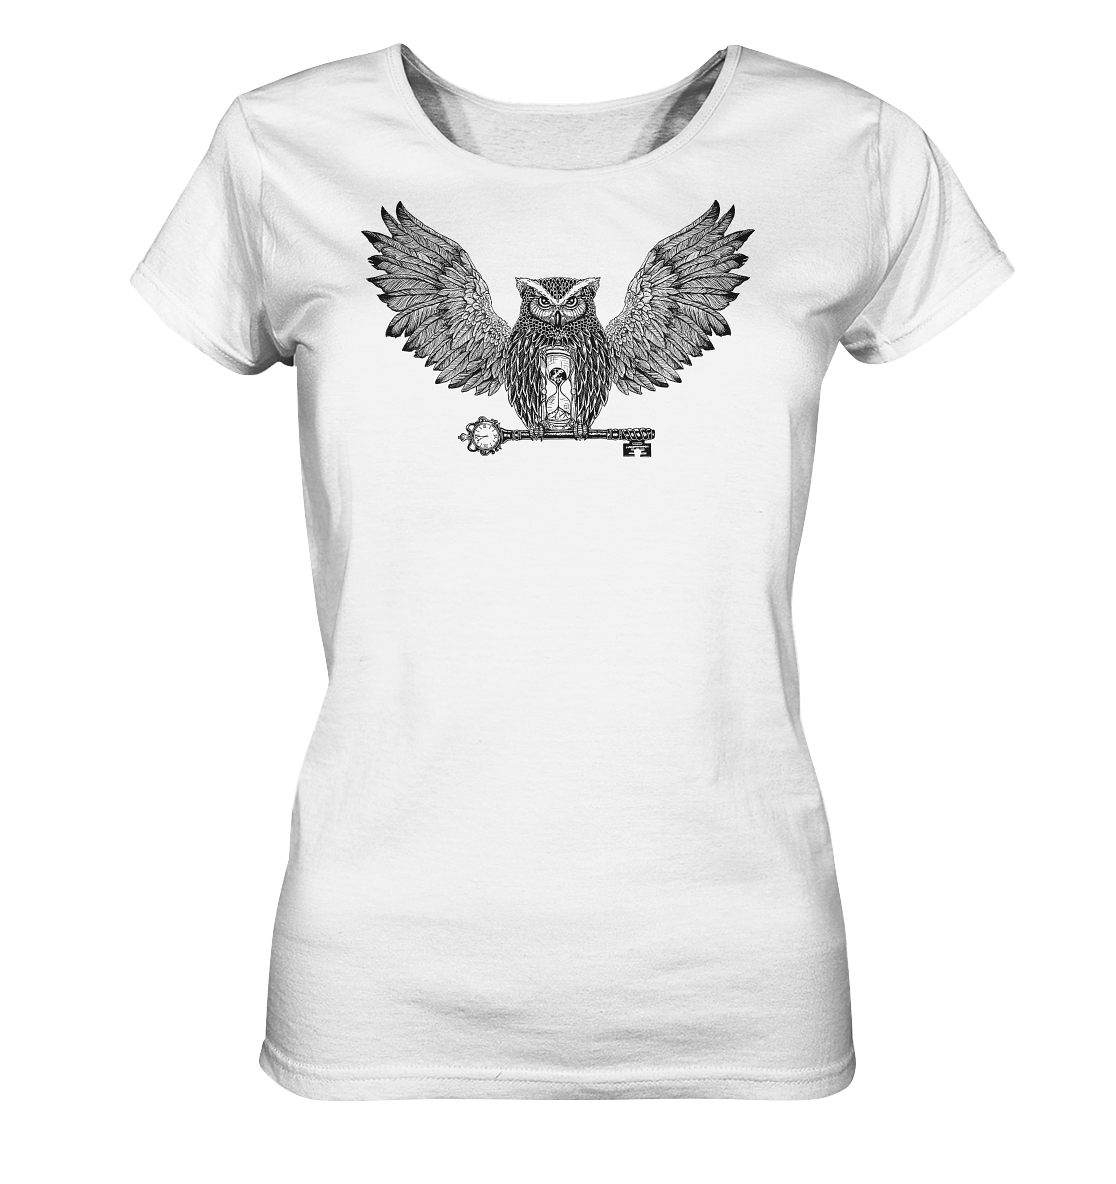 front-ladies-organic-shirt-f8f8f8-1116x-5.png